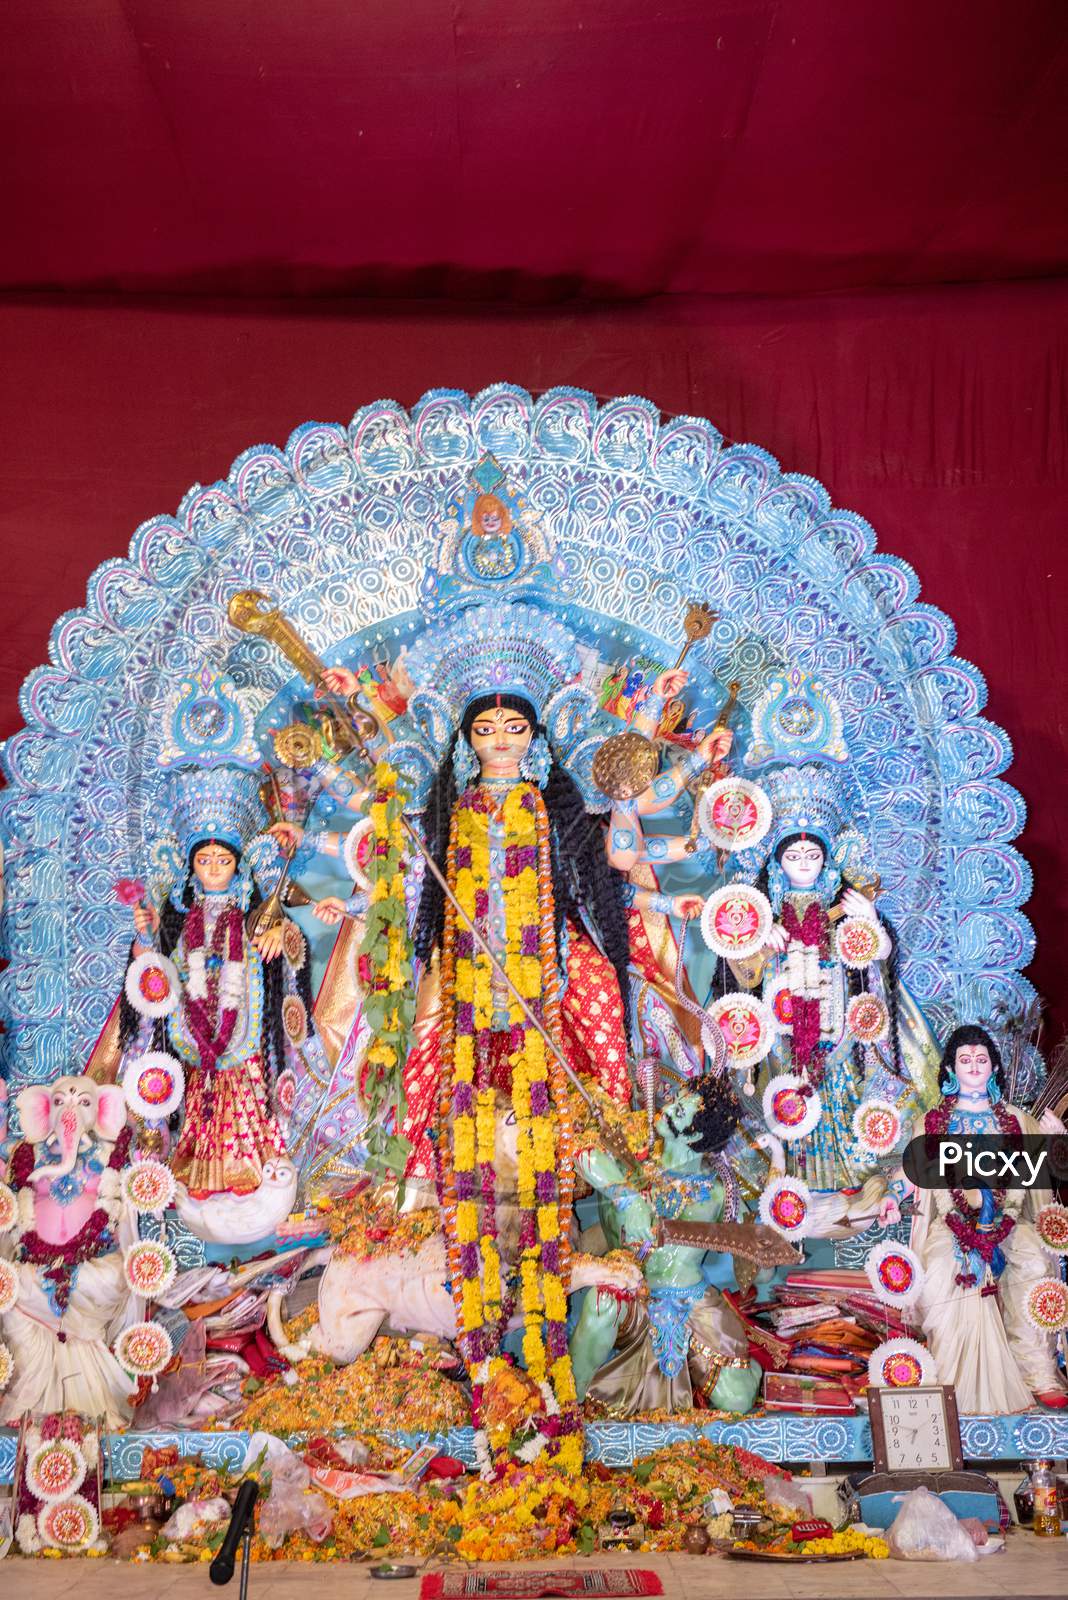 Decorated Indian Hindu Goddess Durga Devi Statue during puja